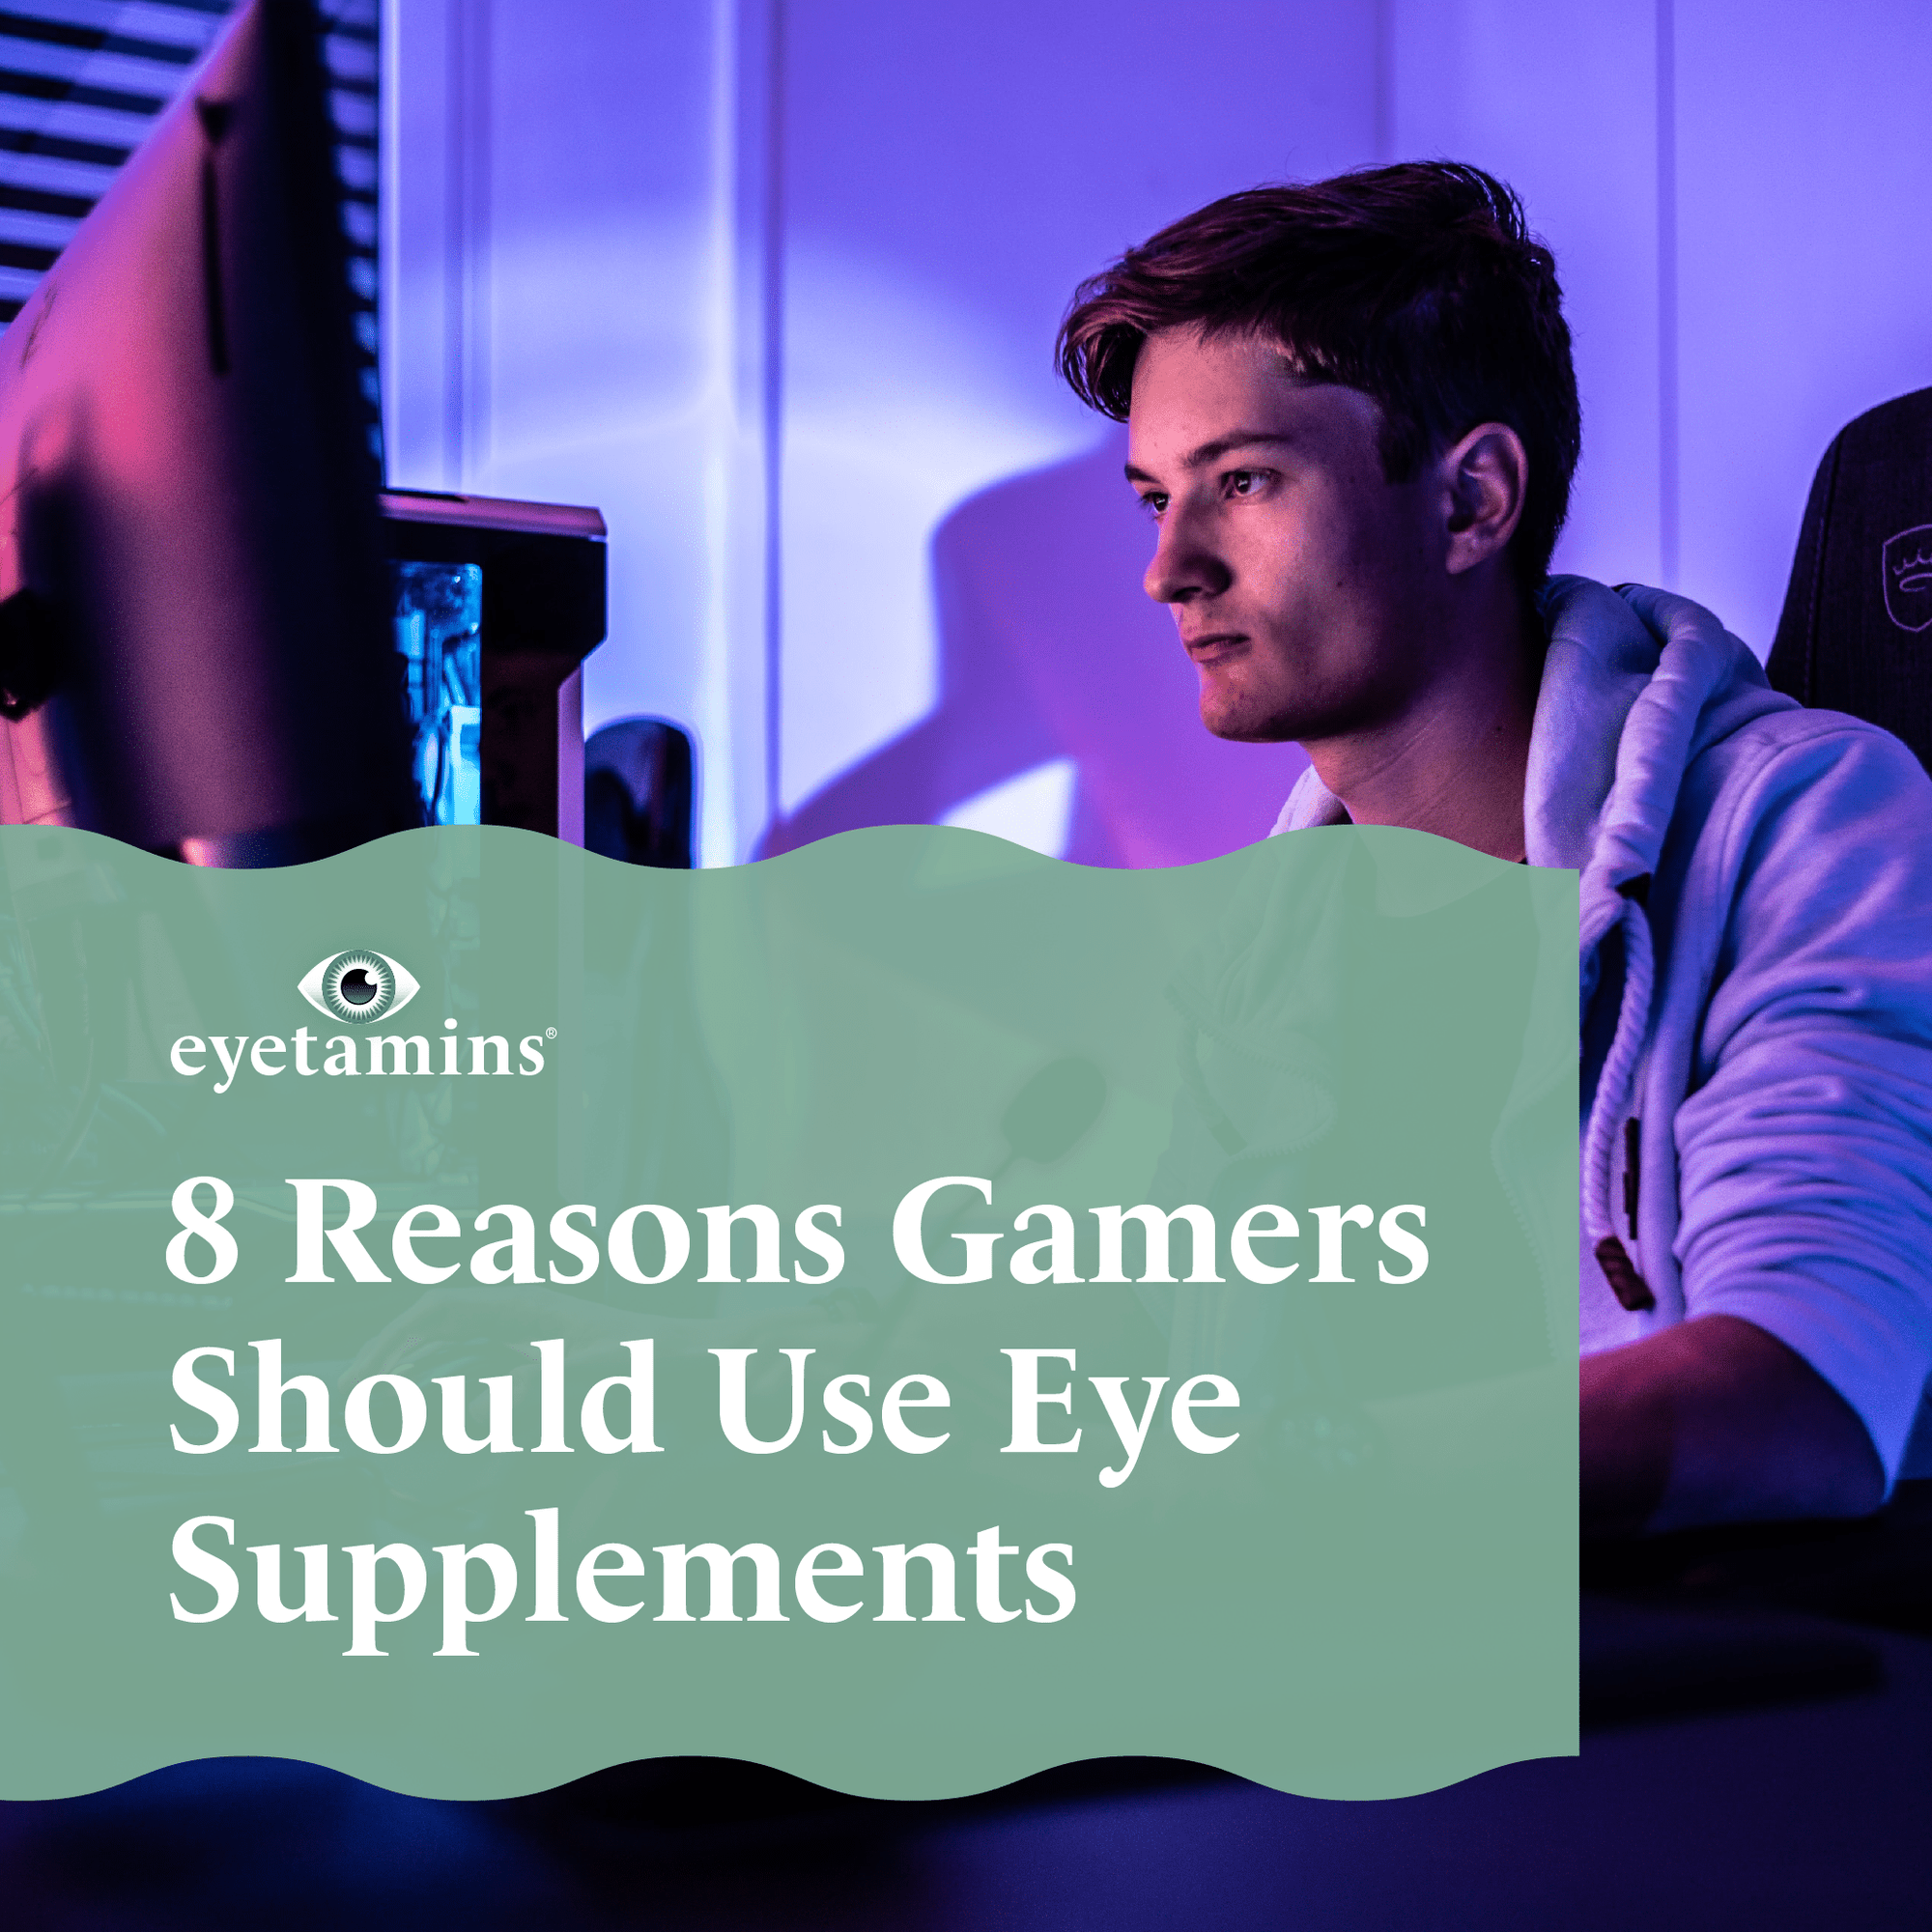 Eyetamins - 8 Reasons Gamers Should Use Eye Supplements